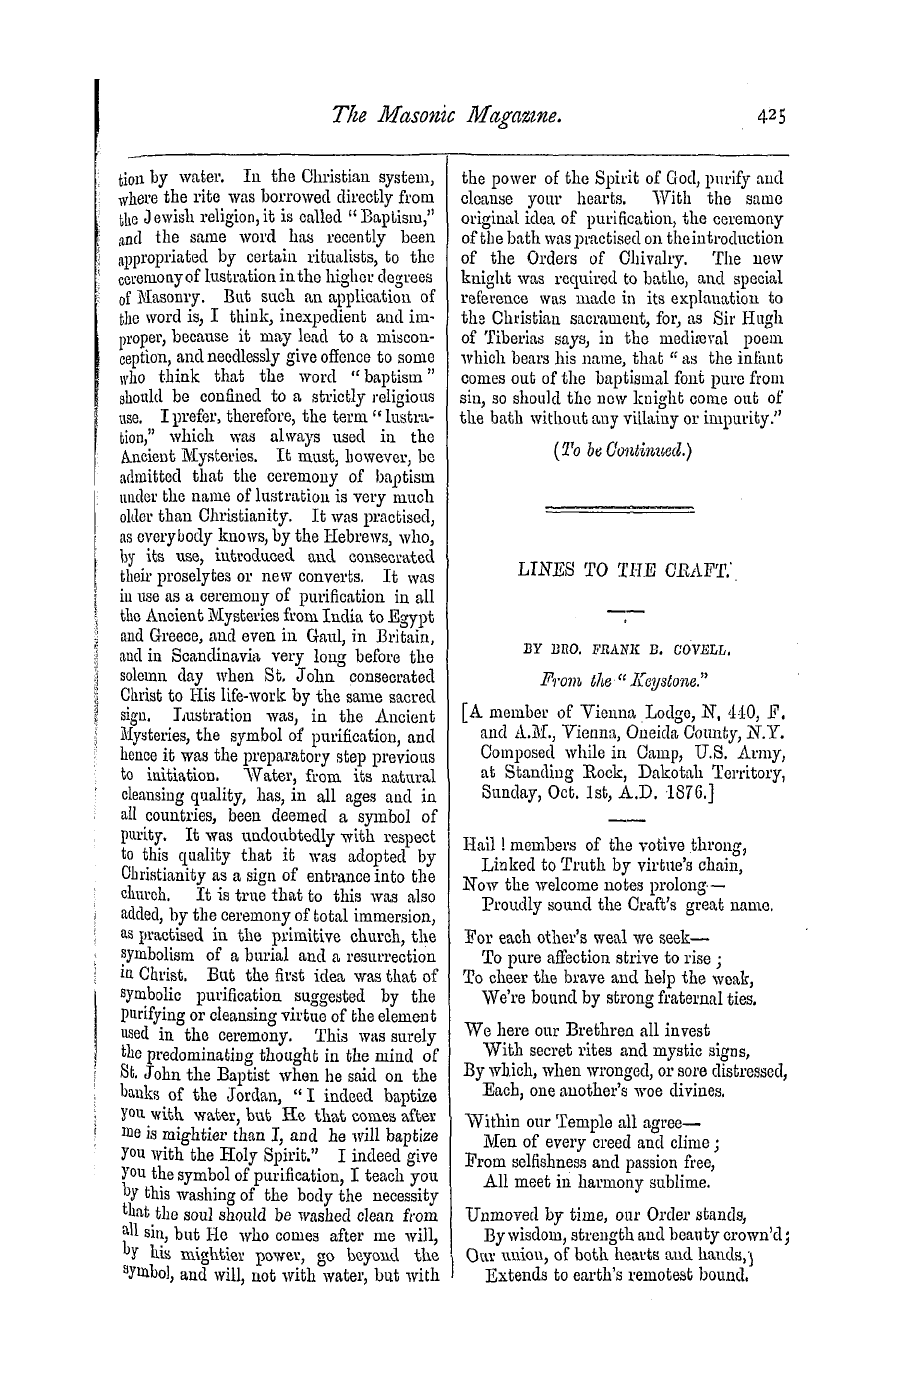 The Masonic Magazine: 1877-02-01: 11